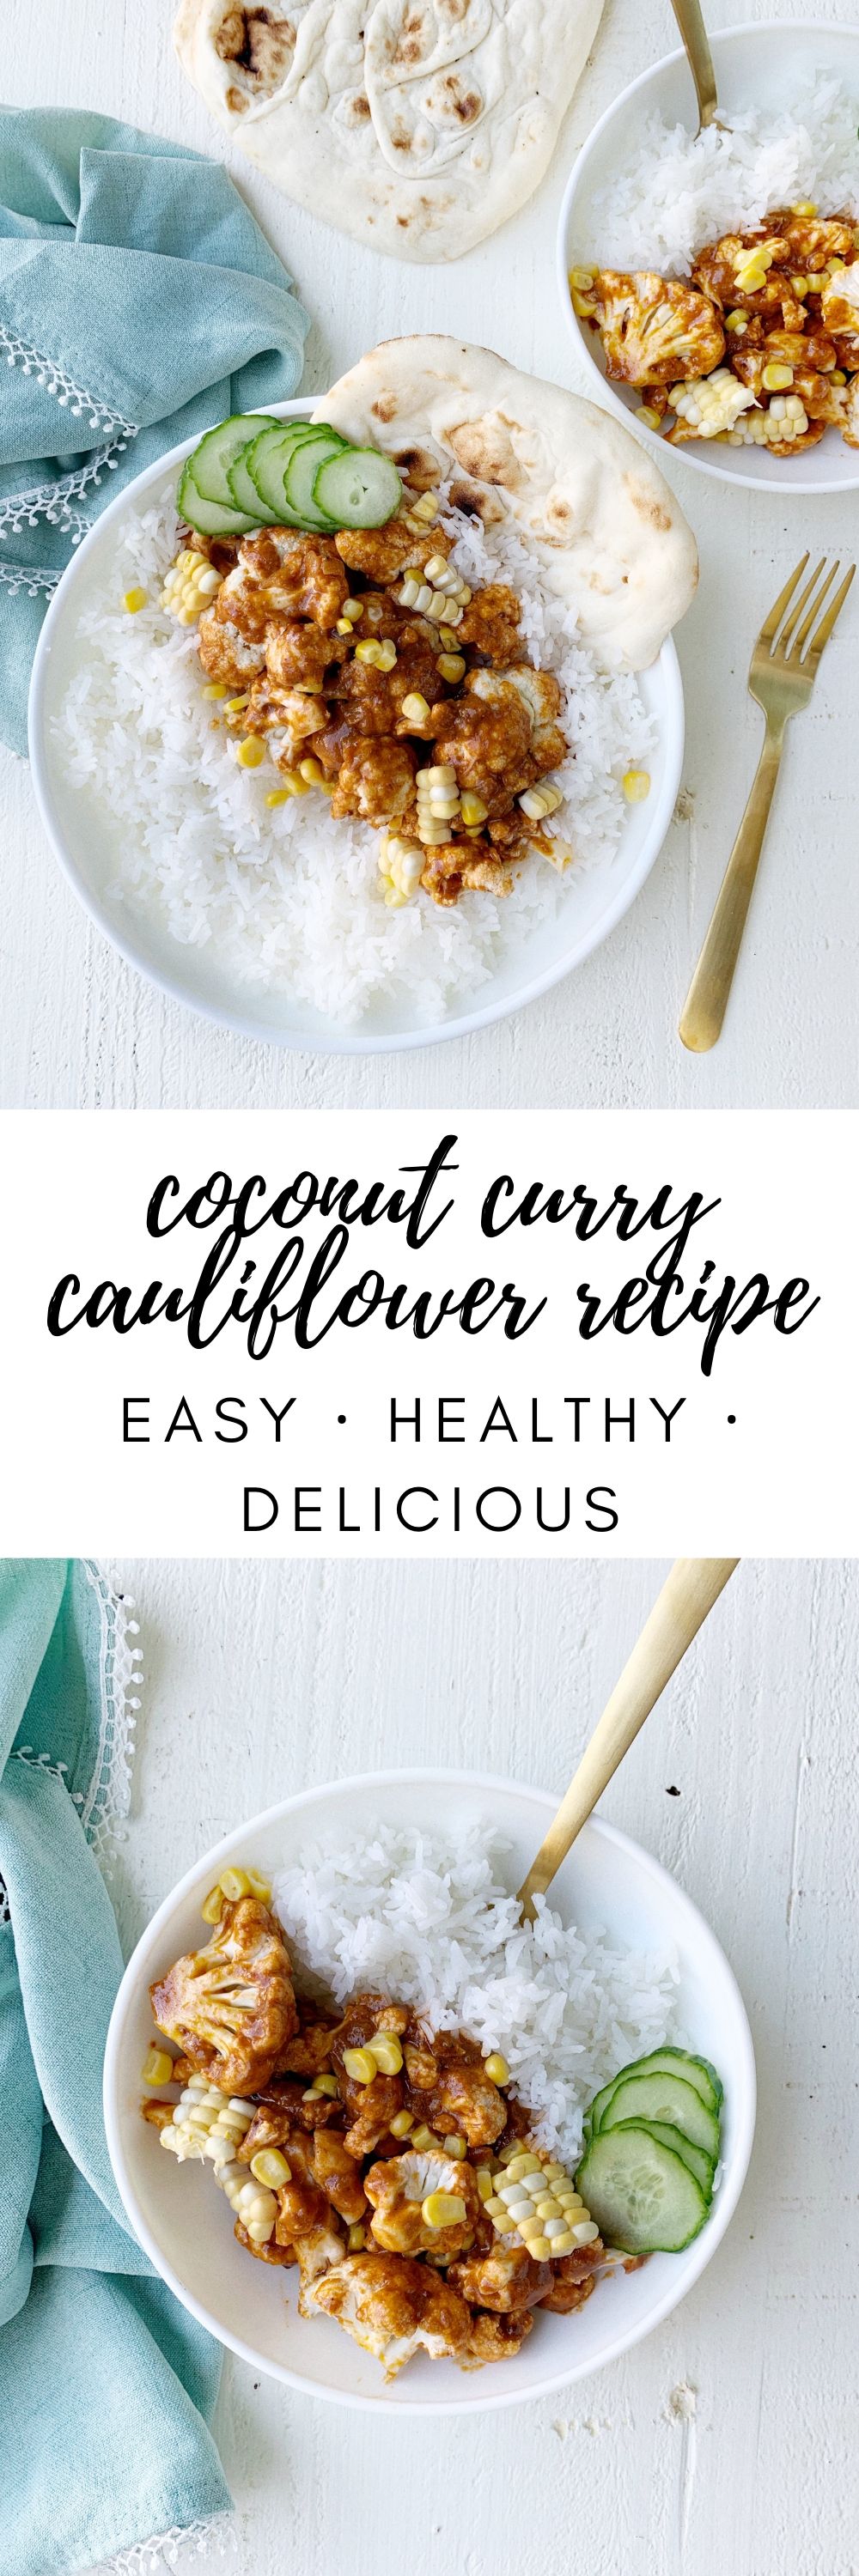 coconut curry cauliflower recipe